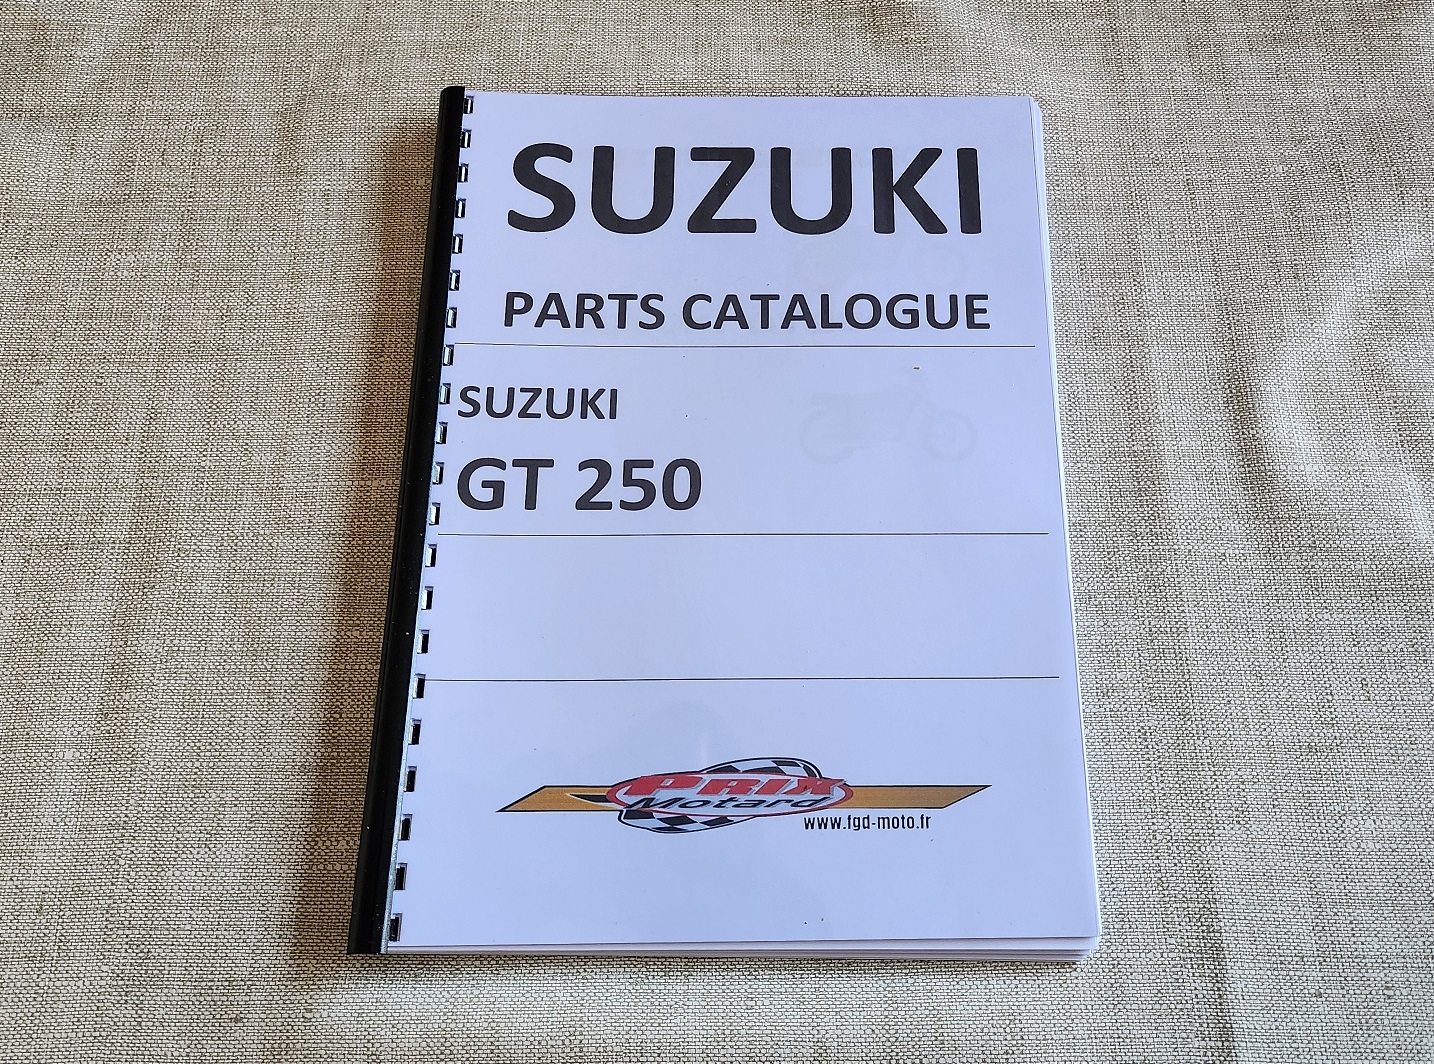 SUZUKI GT 250 PART LIST CATALOGUE PIECES